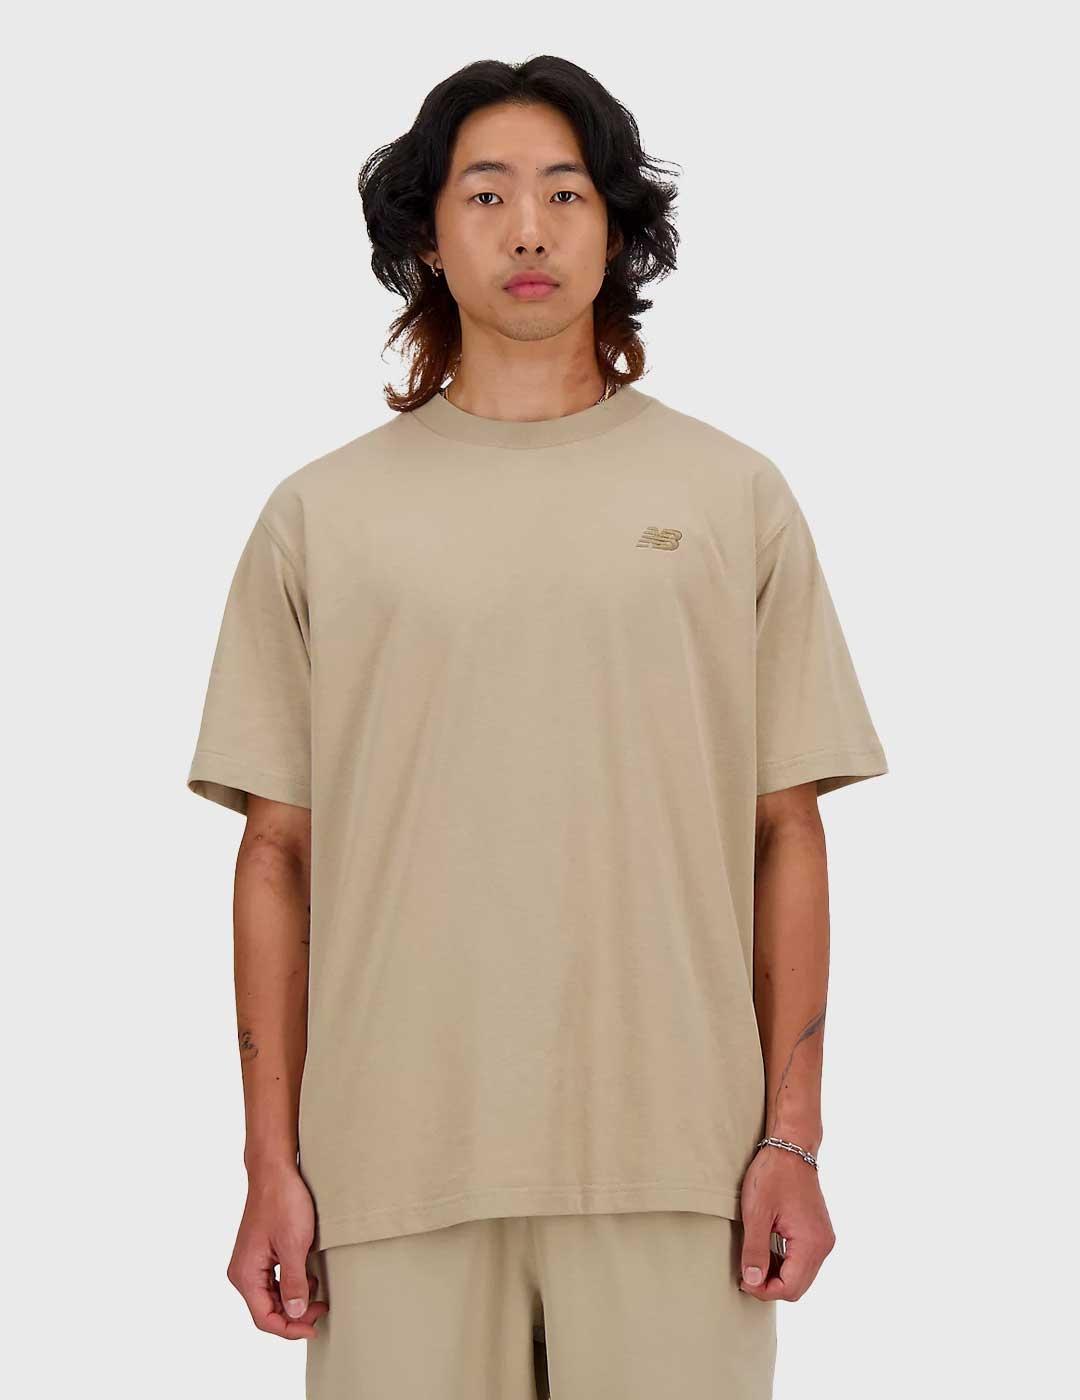 Camiseta New Balance Athletics Cotton beige para hombre